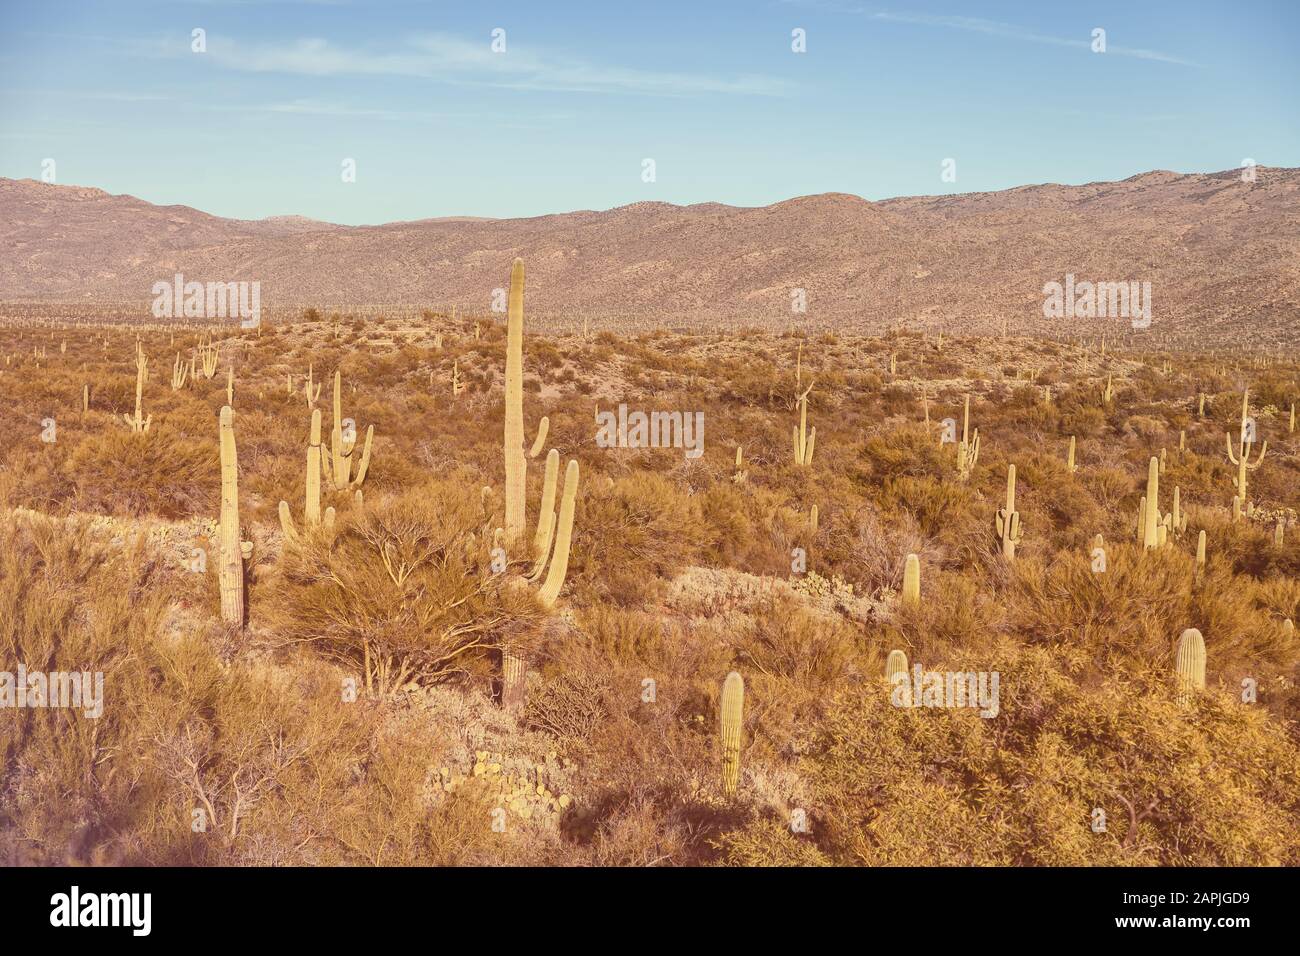 Saguaro cacti (Carnegiea gigantea), and surrounding plants at saguaro forest, Saguaro National Park, Arizona, USA. Stock Photo